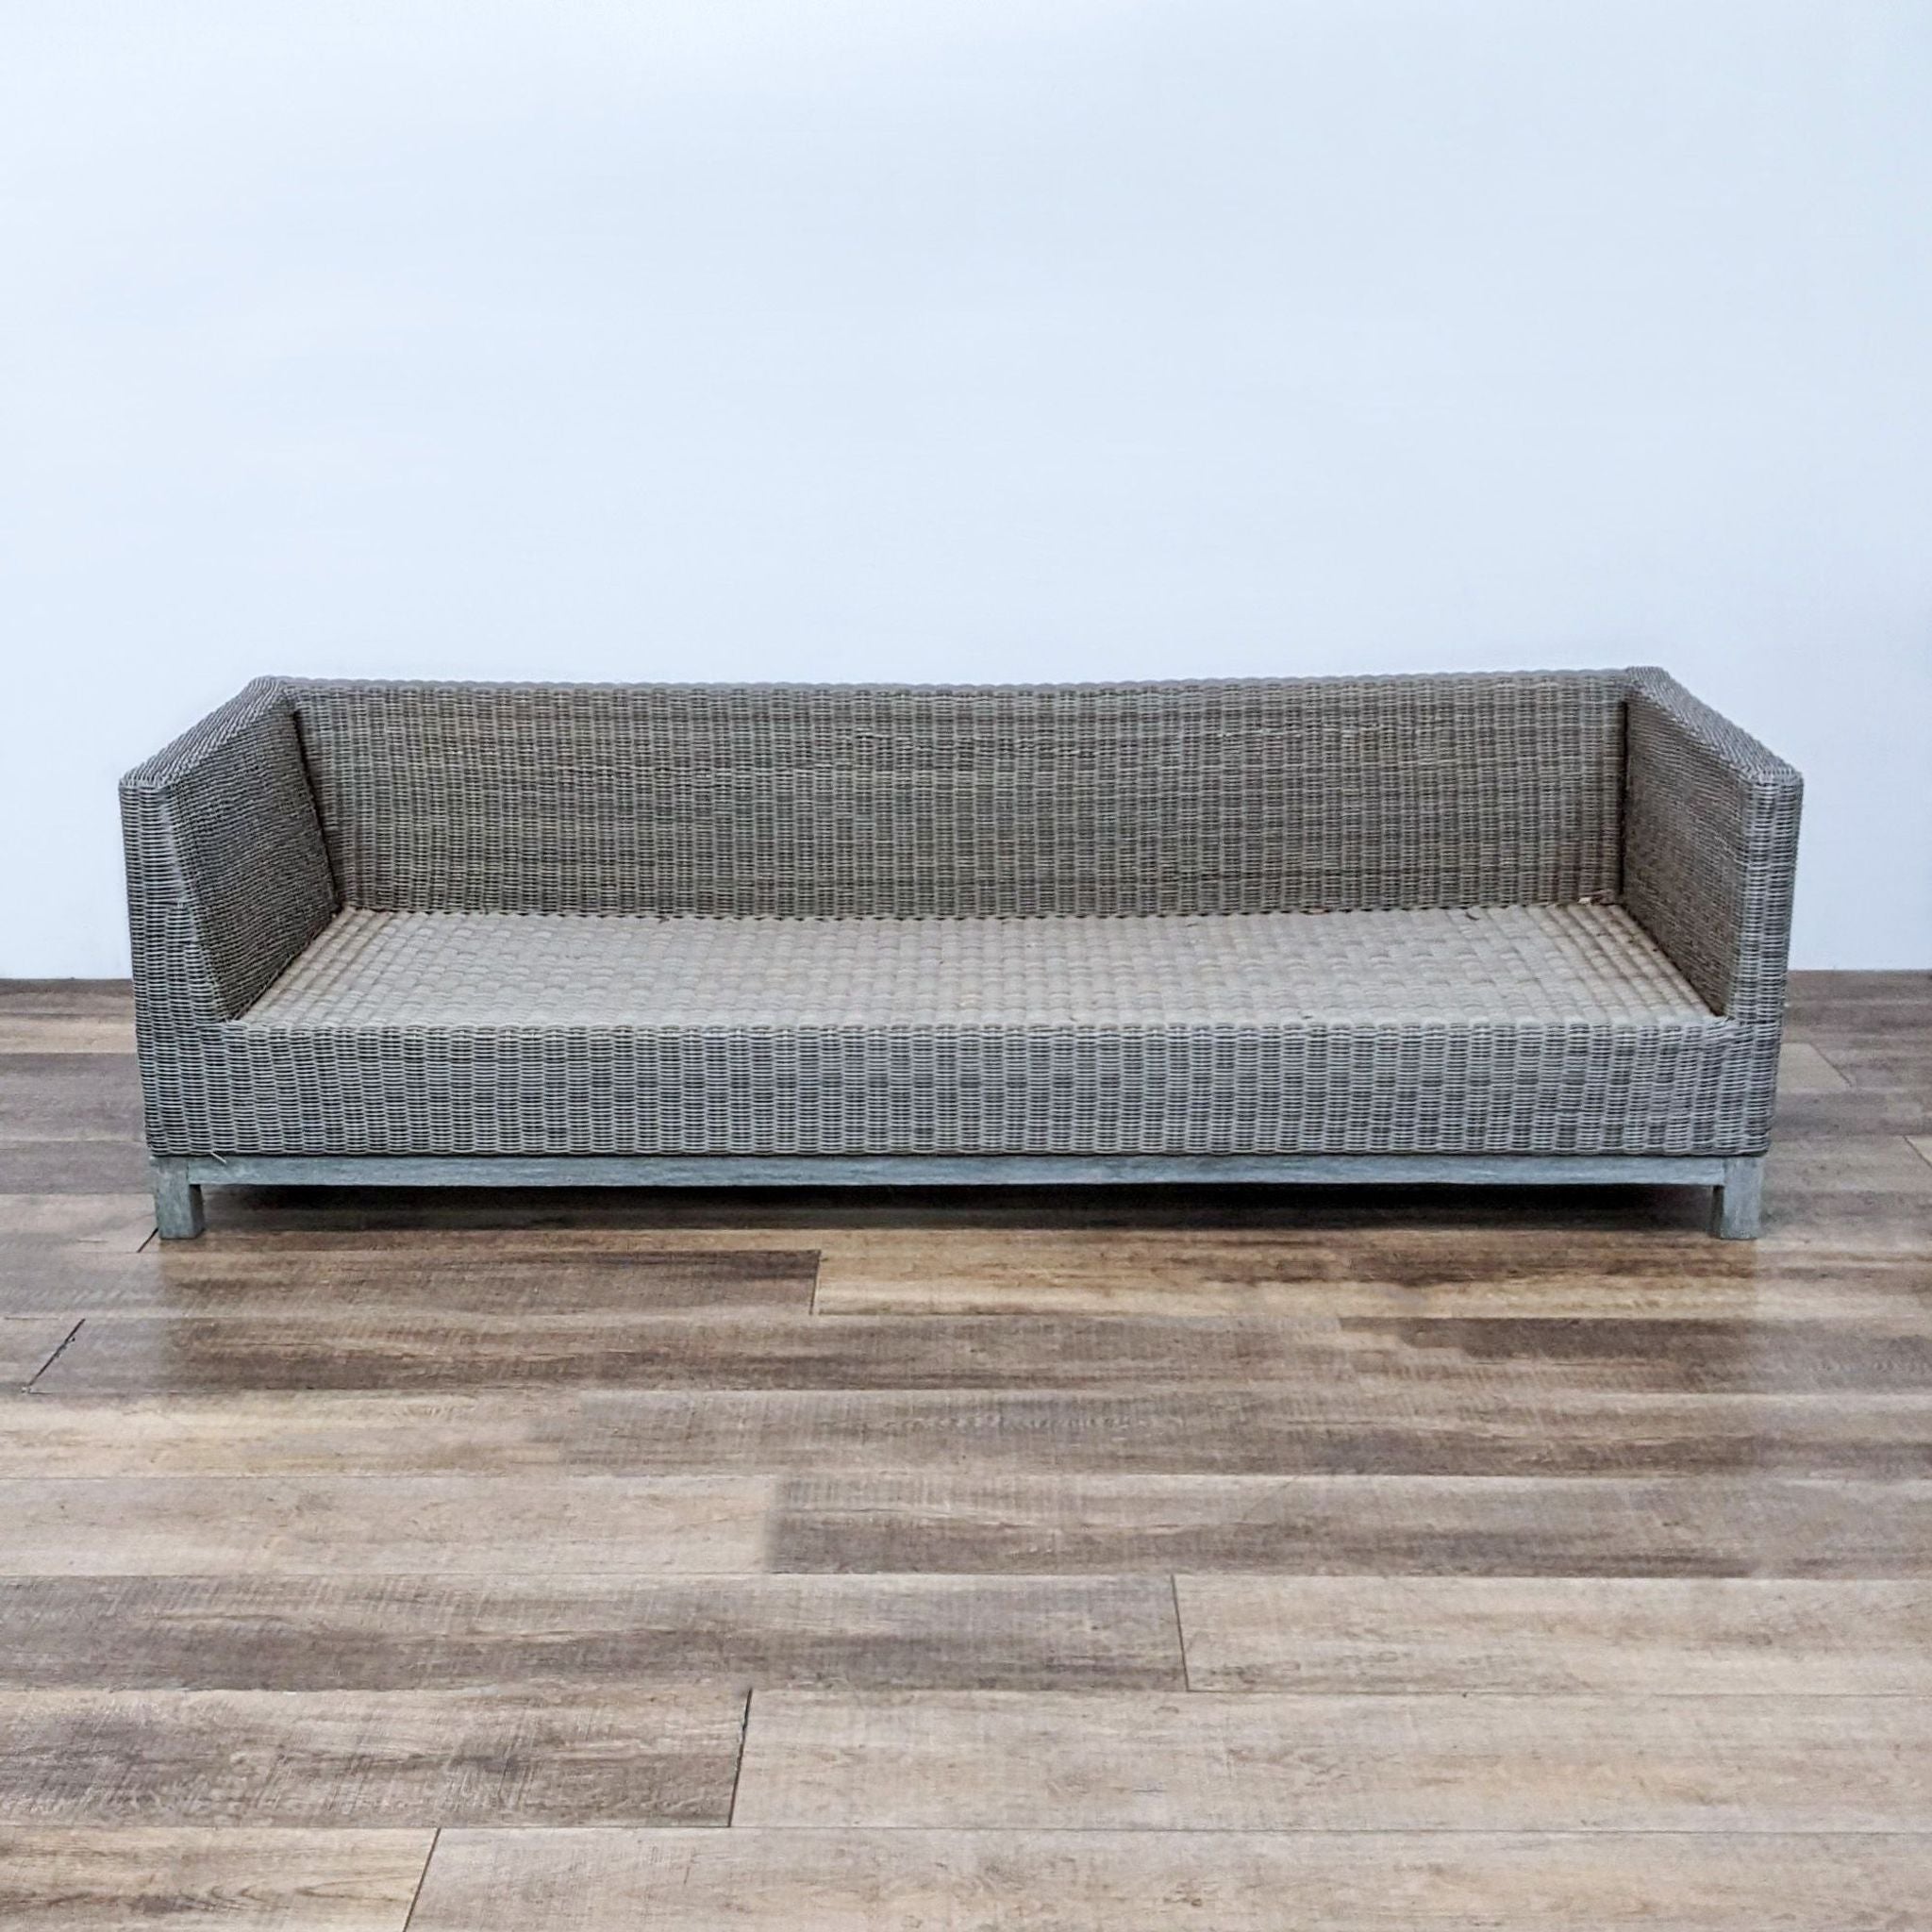 Resin wicker outdoor sofa by Restoration Hardware with a modern teak wood frame on hardwood flooring.